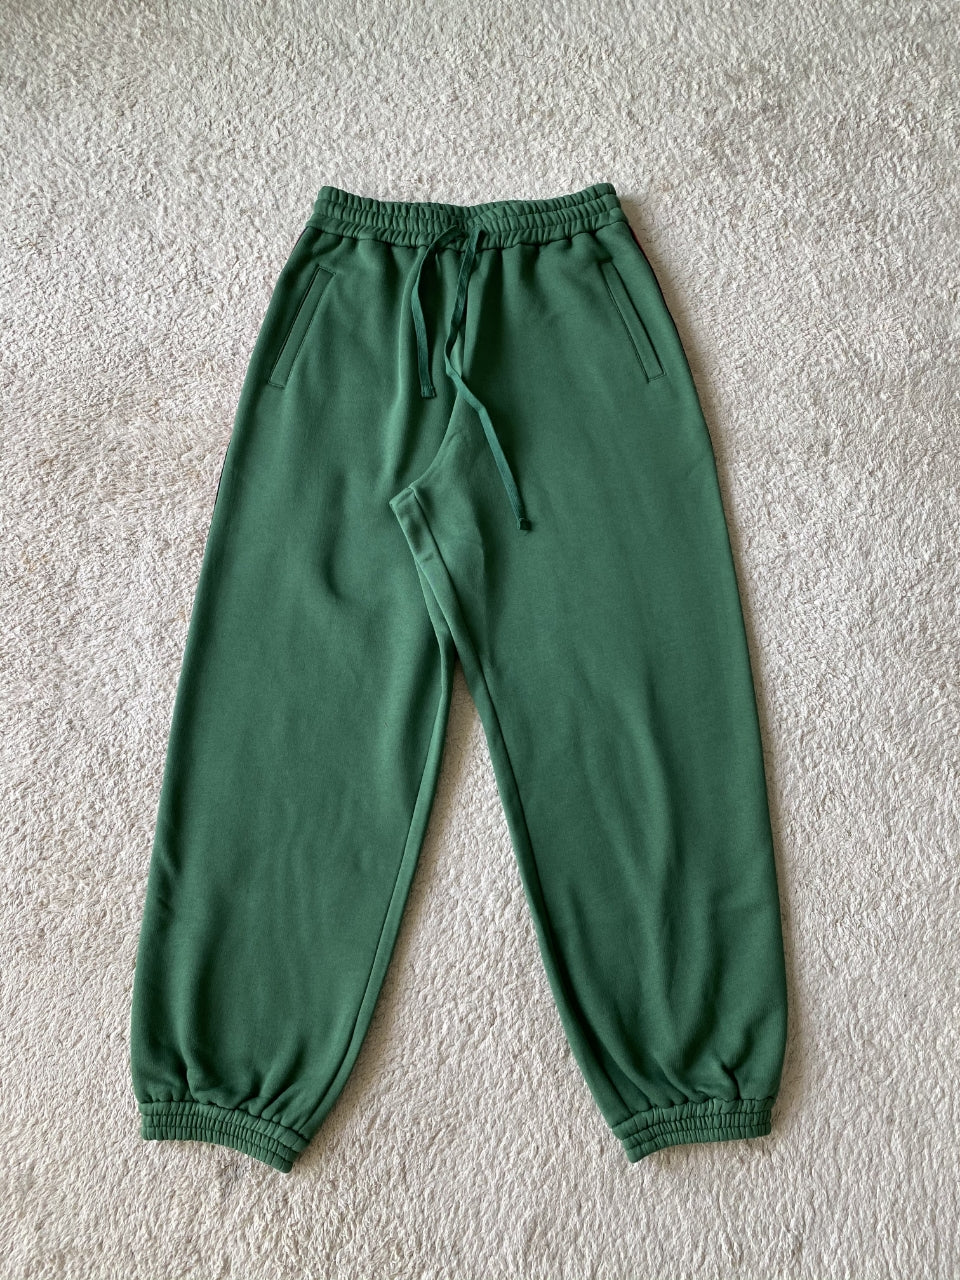 Green Pant